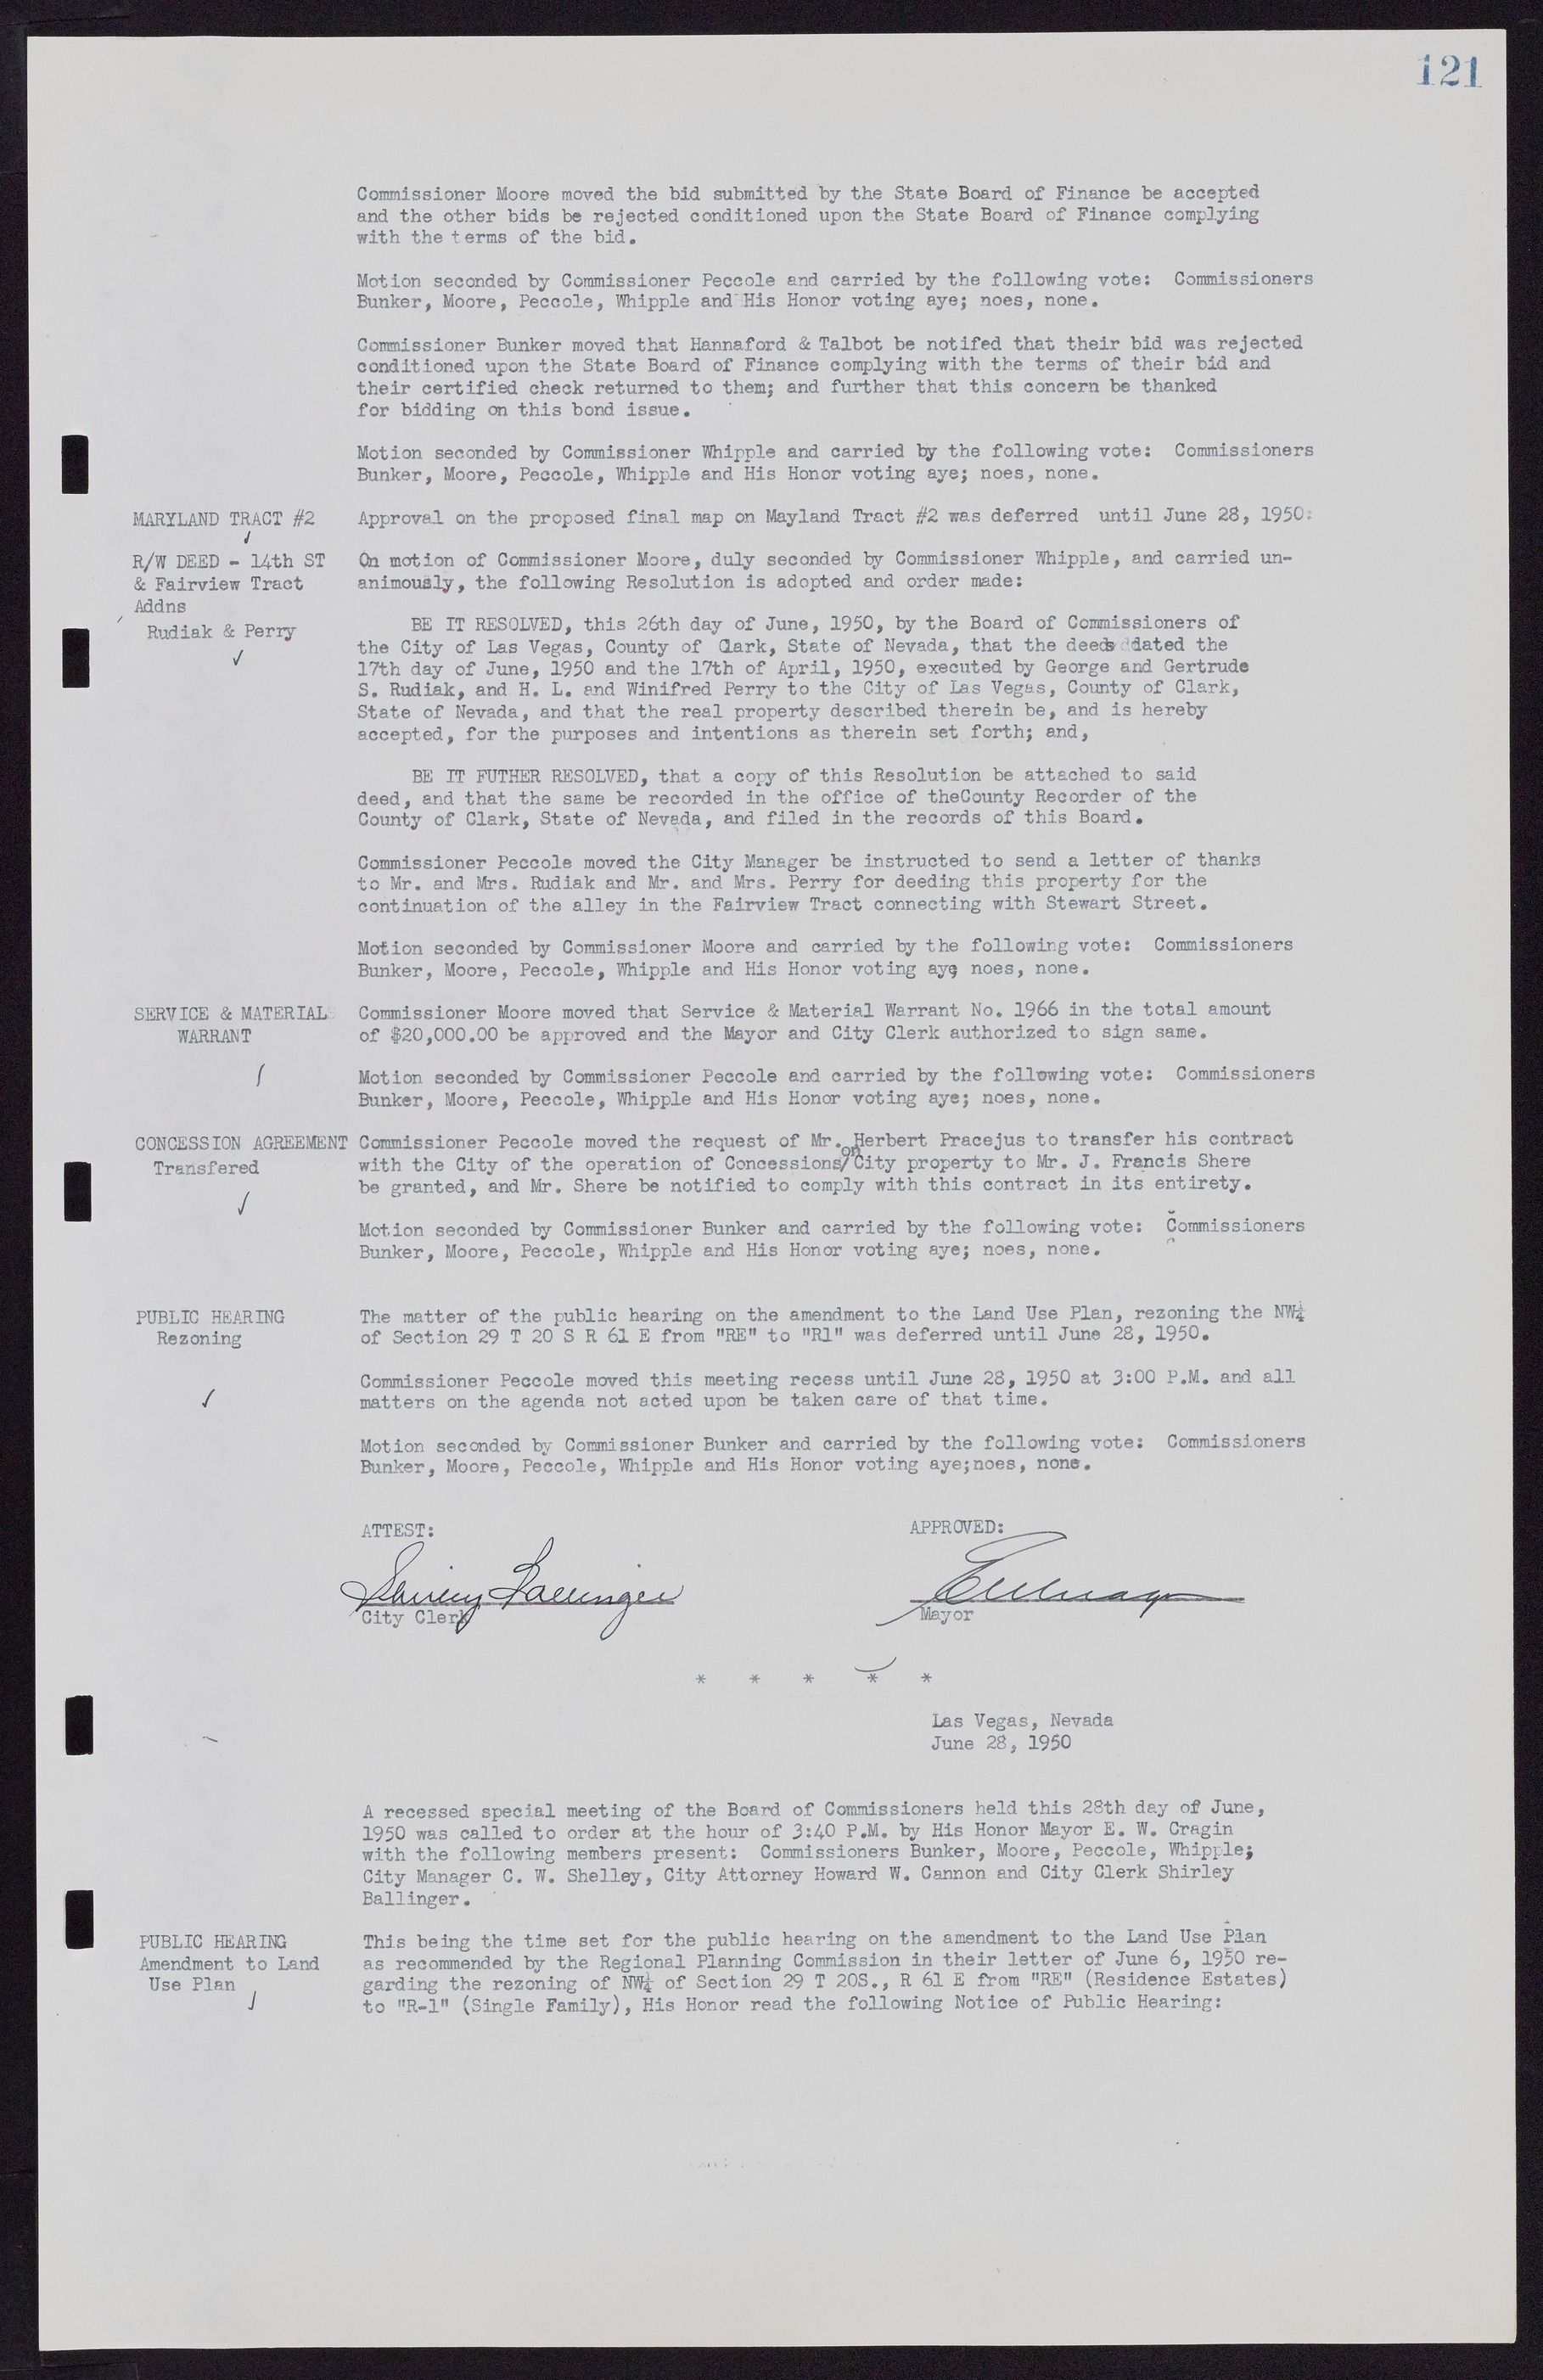 Las Vegas City Commission Minutes, November 7, 1949 to May 21, 1952, lvc000007-129